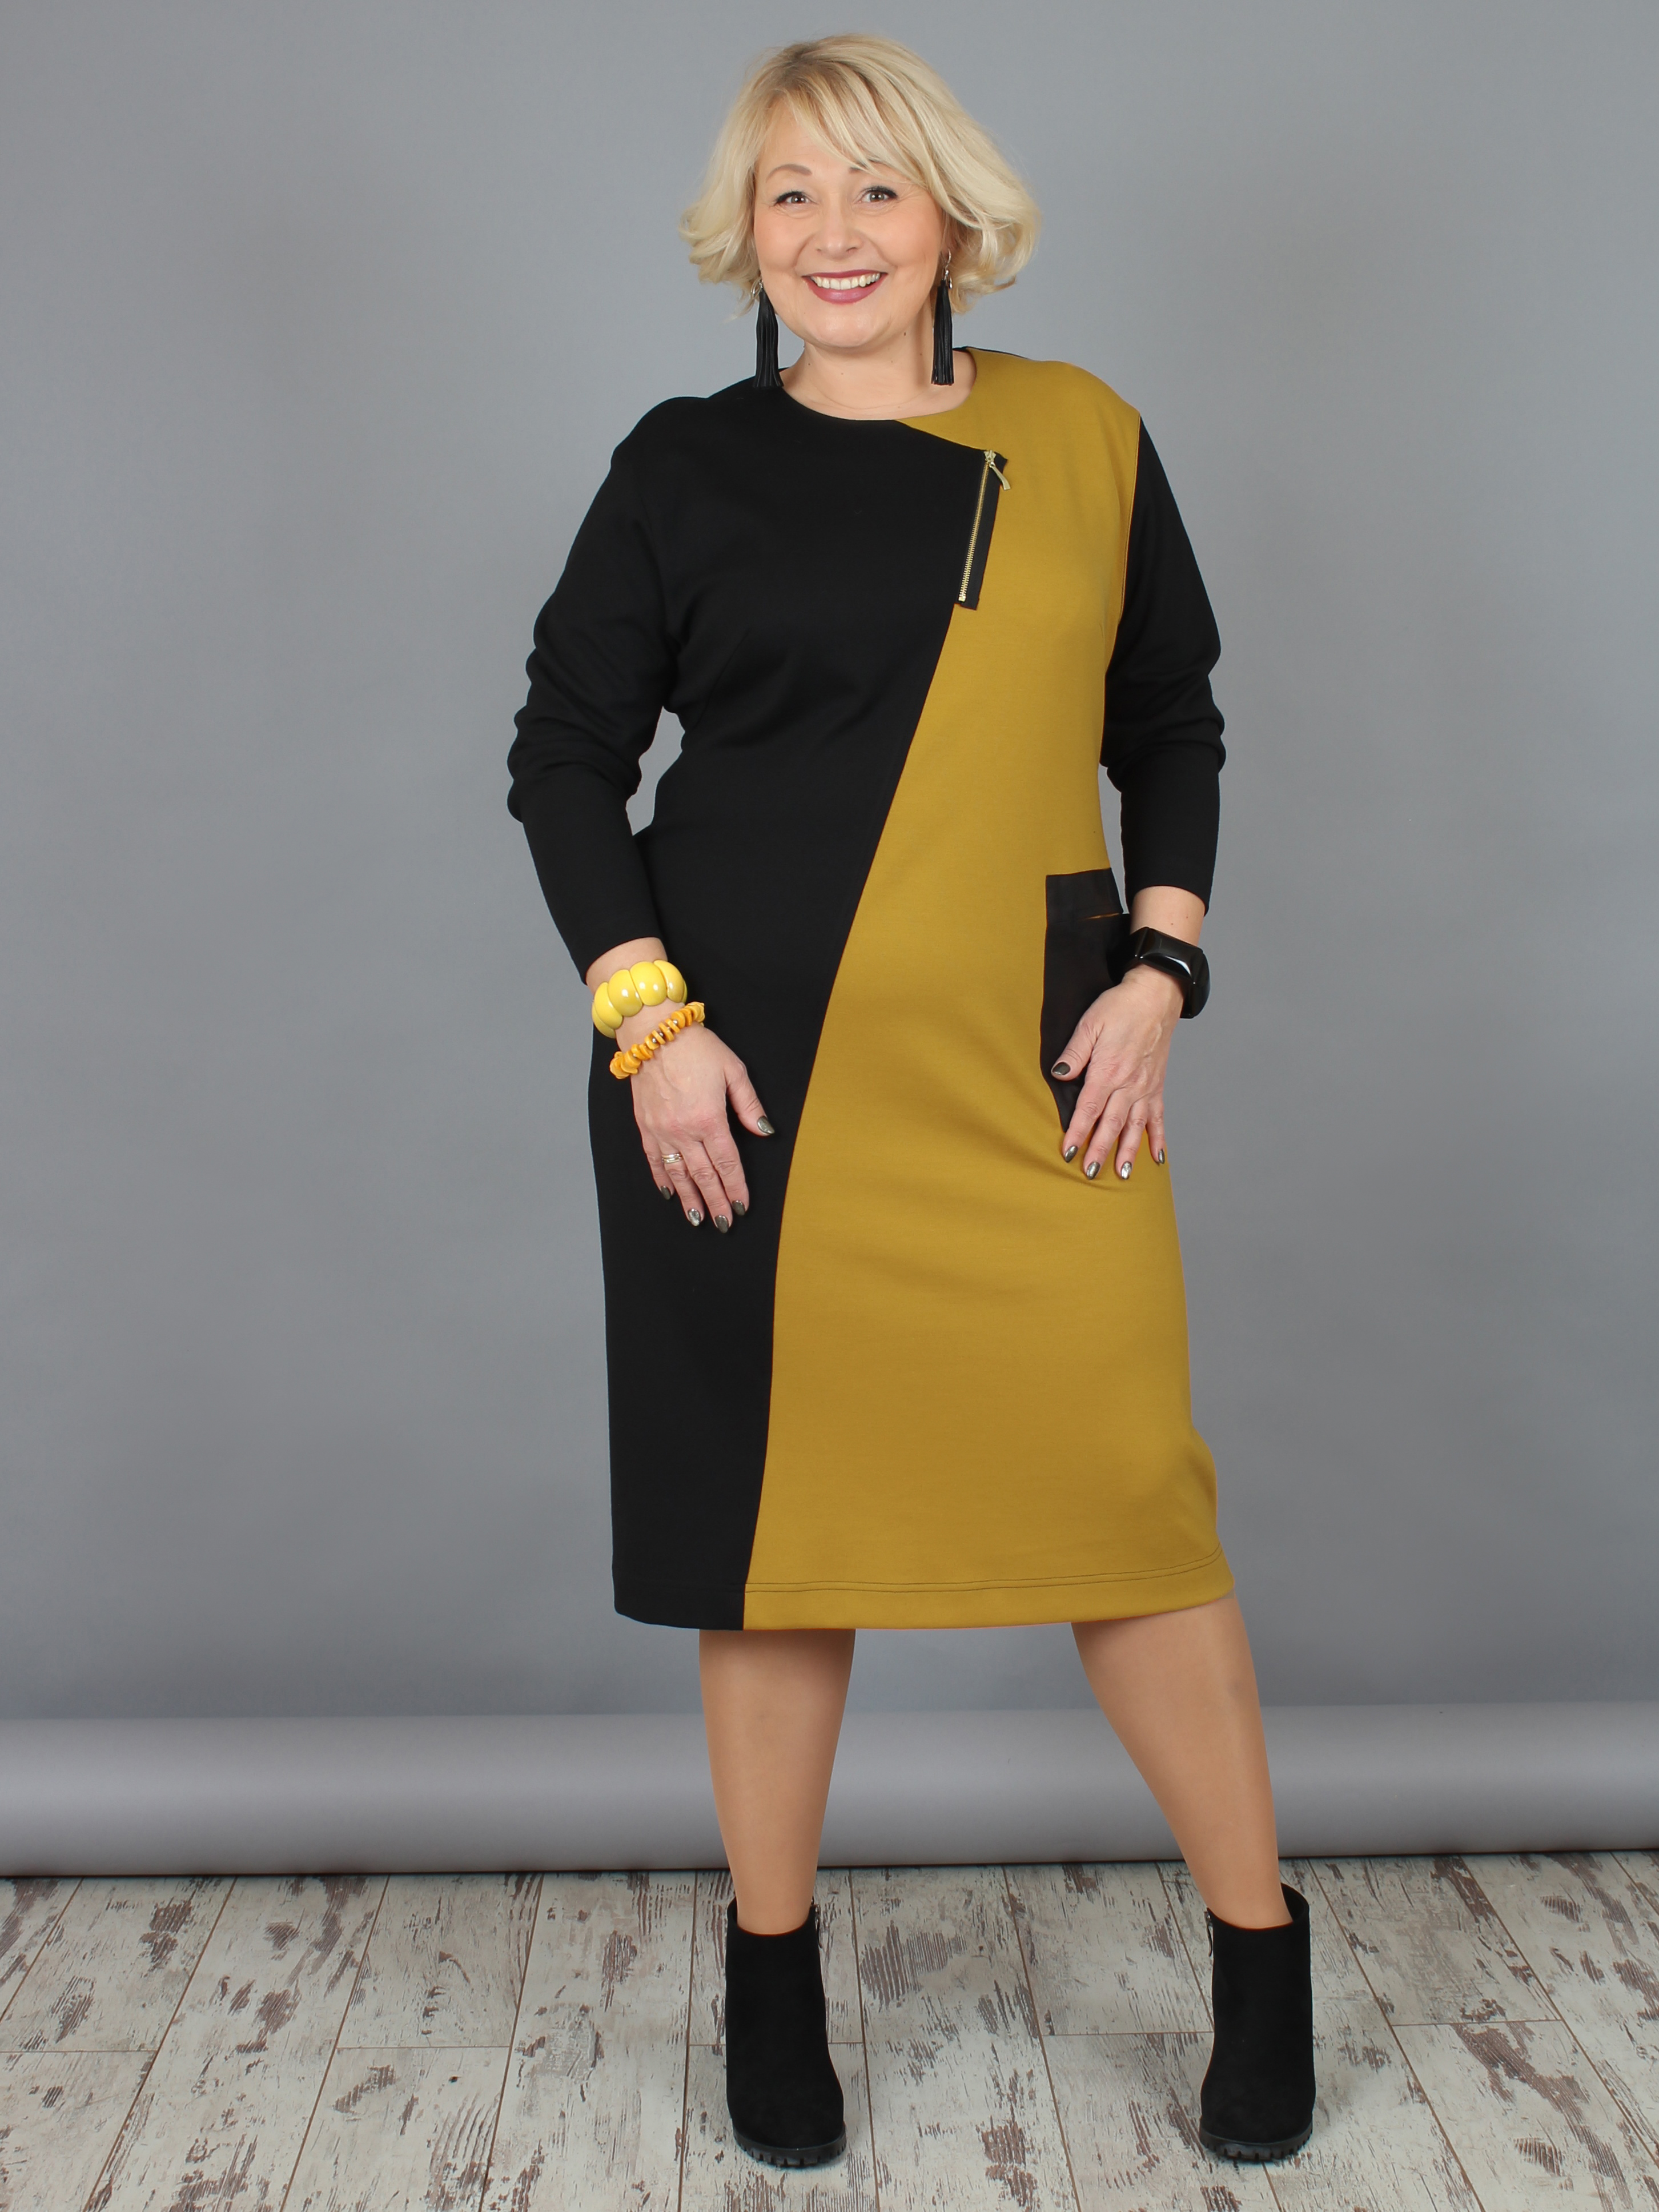 Женское платье NadiN 1418/3 62 р Черно-желтое (1418_3_62)